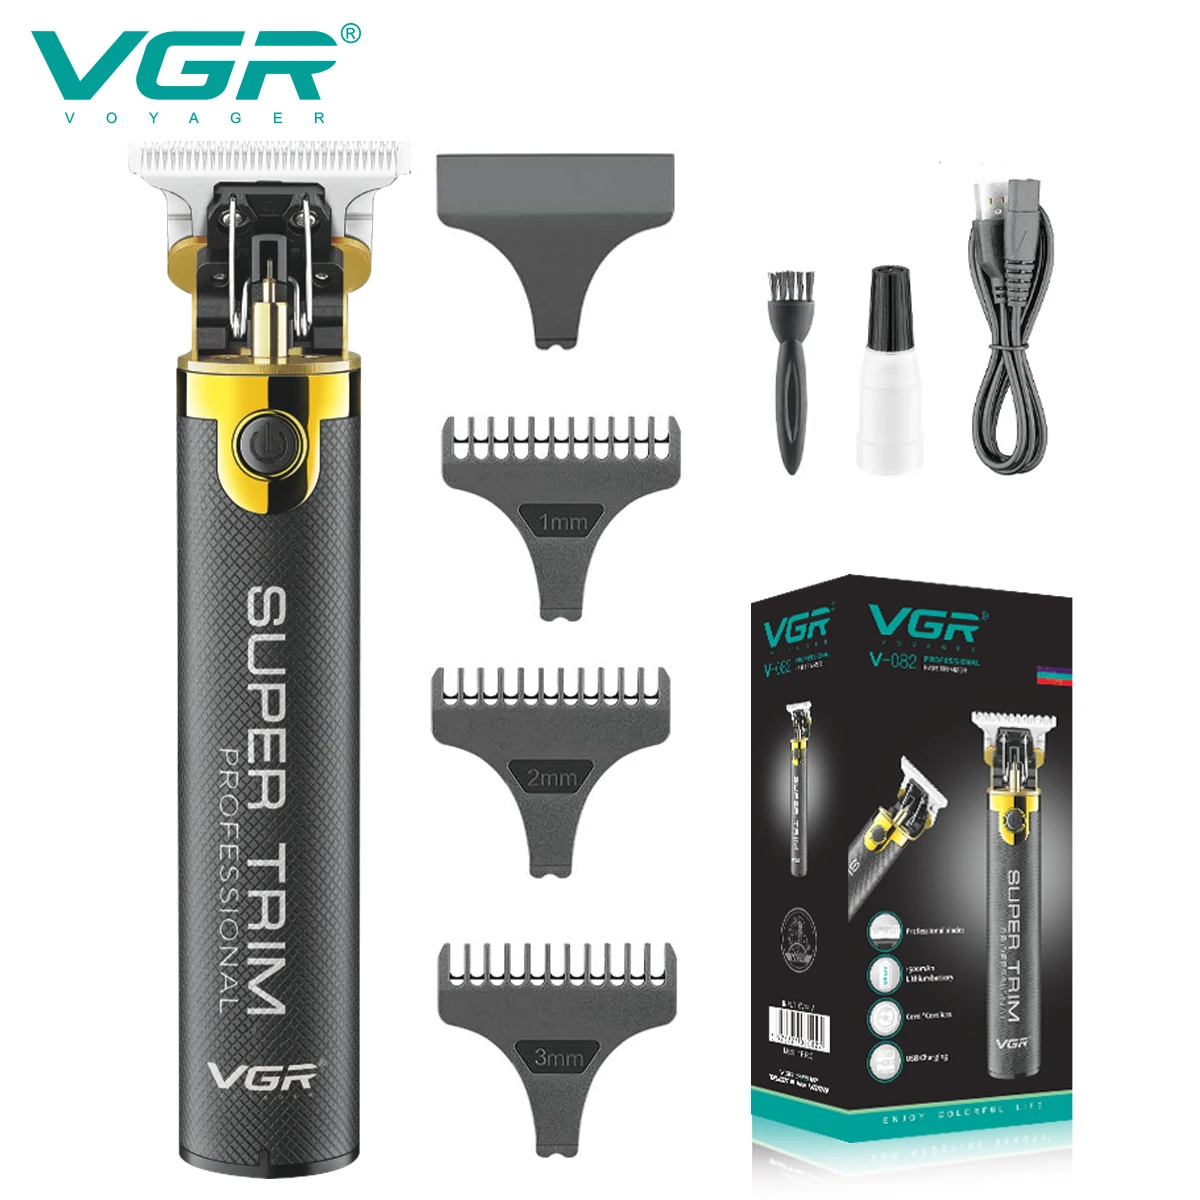 

VGR Professional Hair Clipper Hair Cutting Machine T9 Cordless Haircut Machine Rechargeable Barber Trimmer For Men Haircut V-082